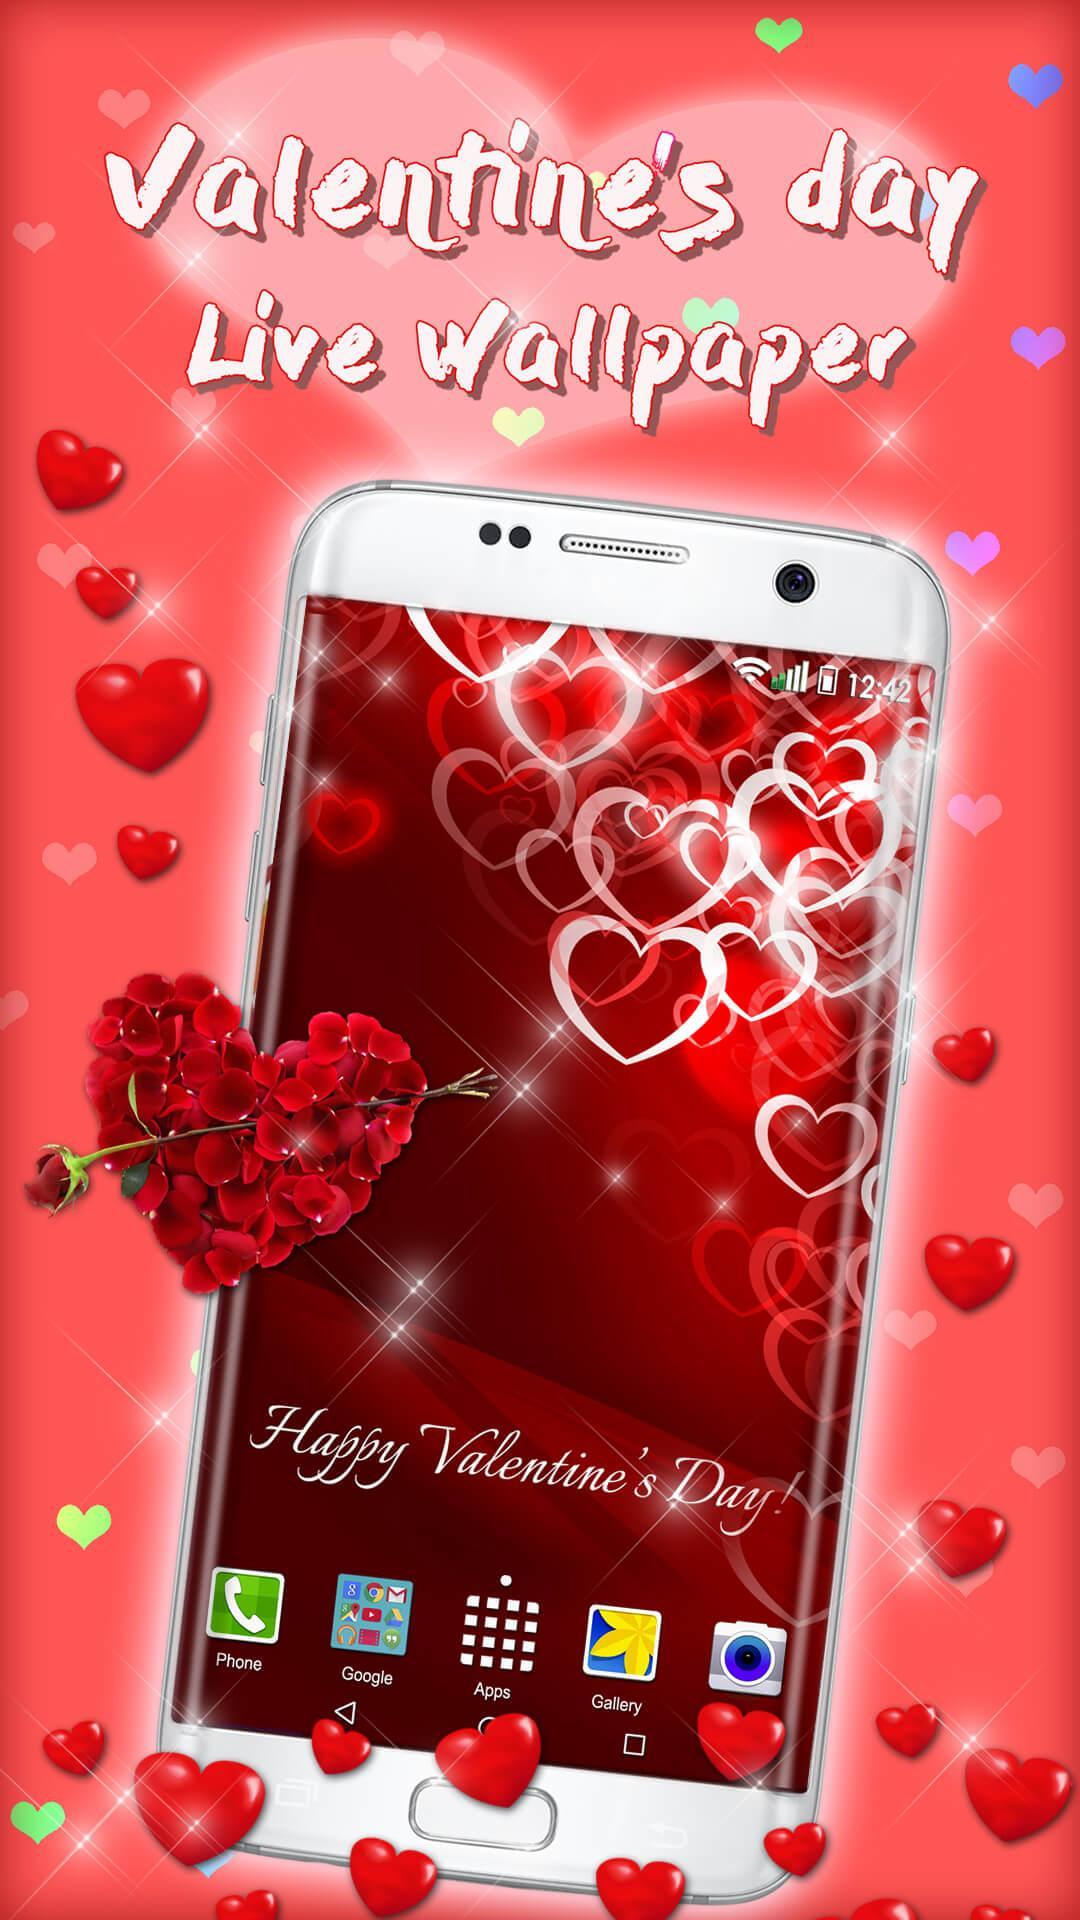 Hari Valentine Wallpaper Cinta Romantis Bergerak For Android APK